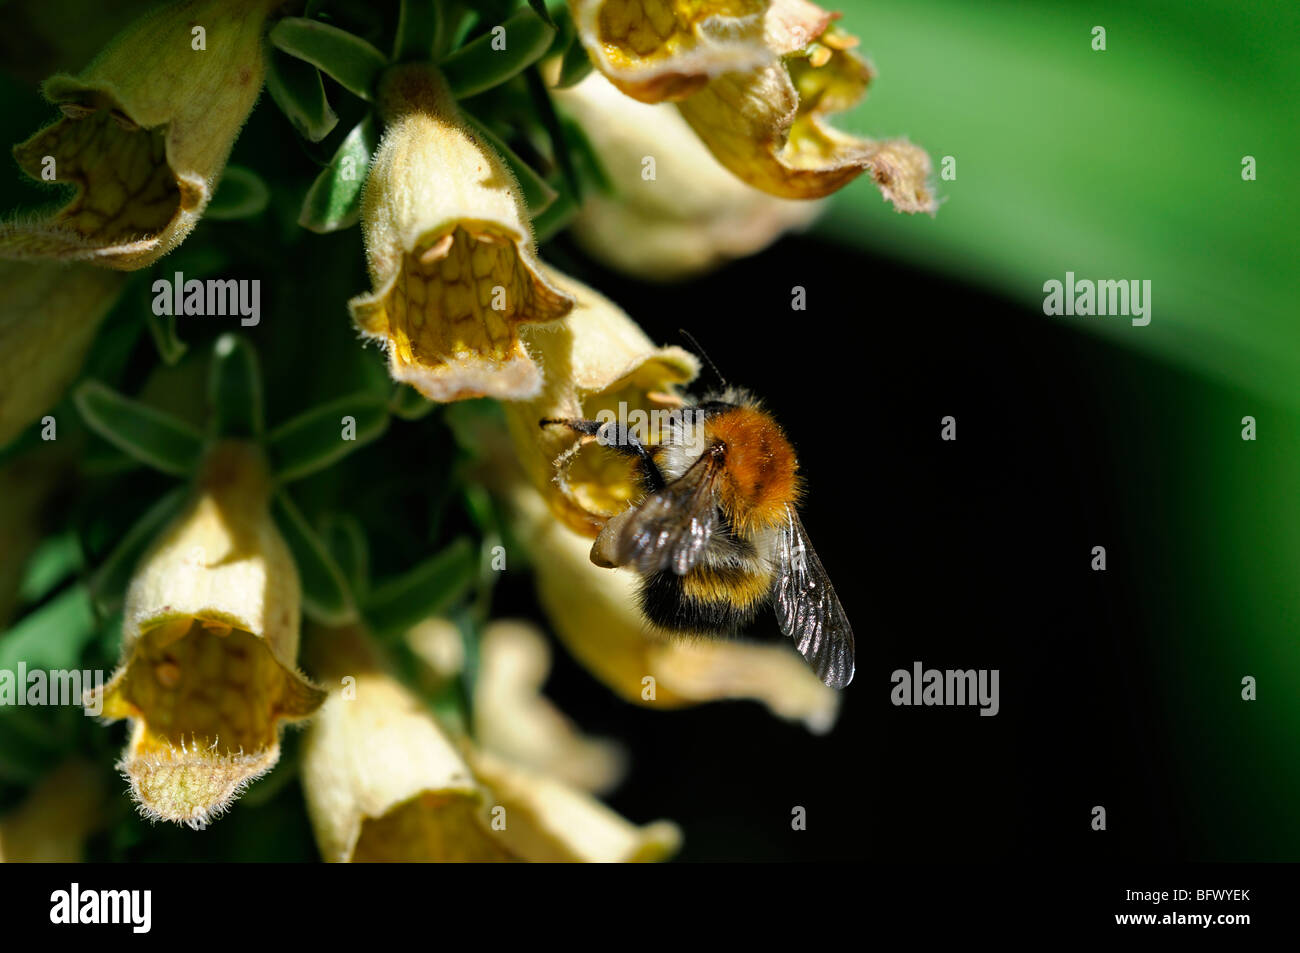 foxglove Digitalis stewartii flower honey bee landing land closeup close up detail macro Stock Photo